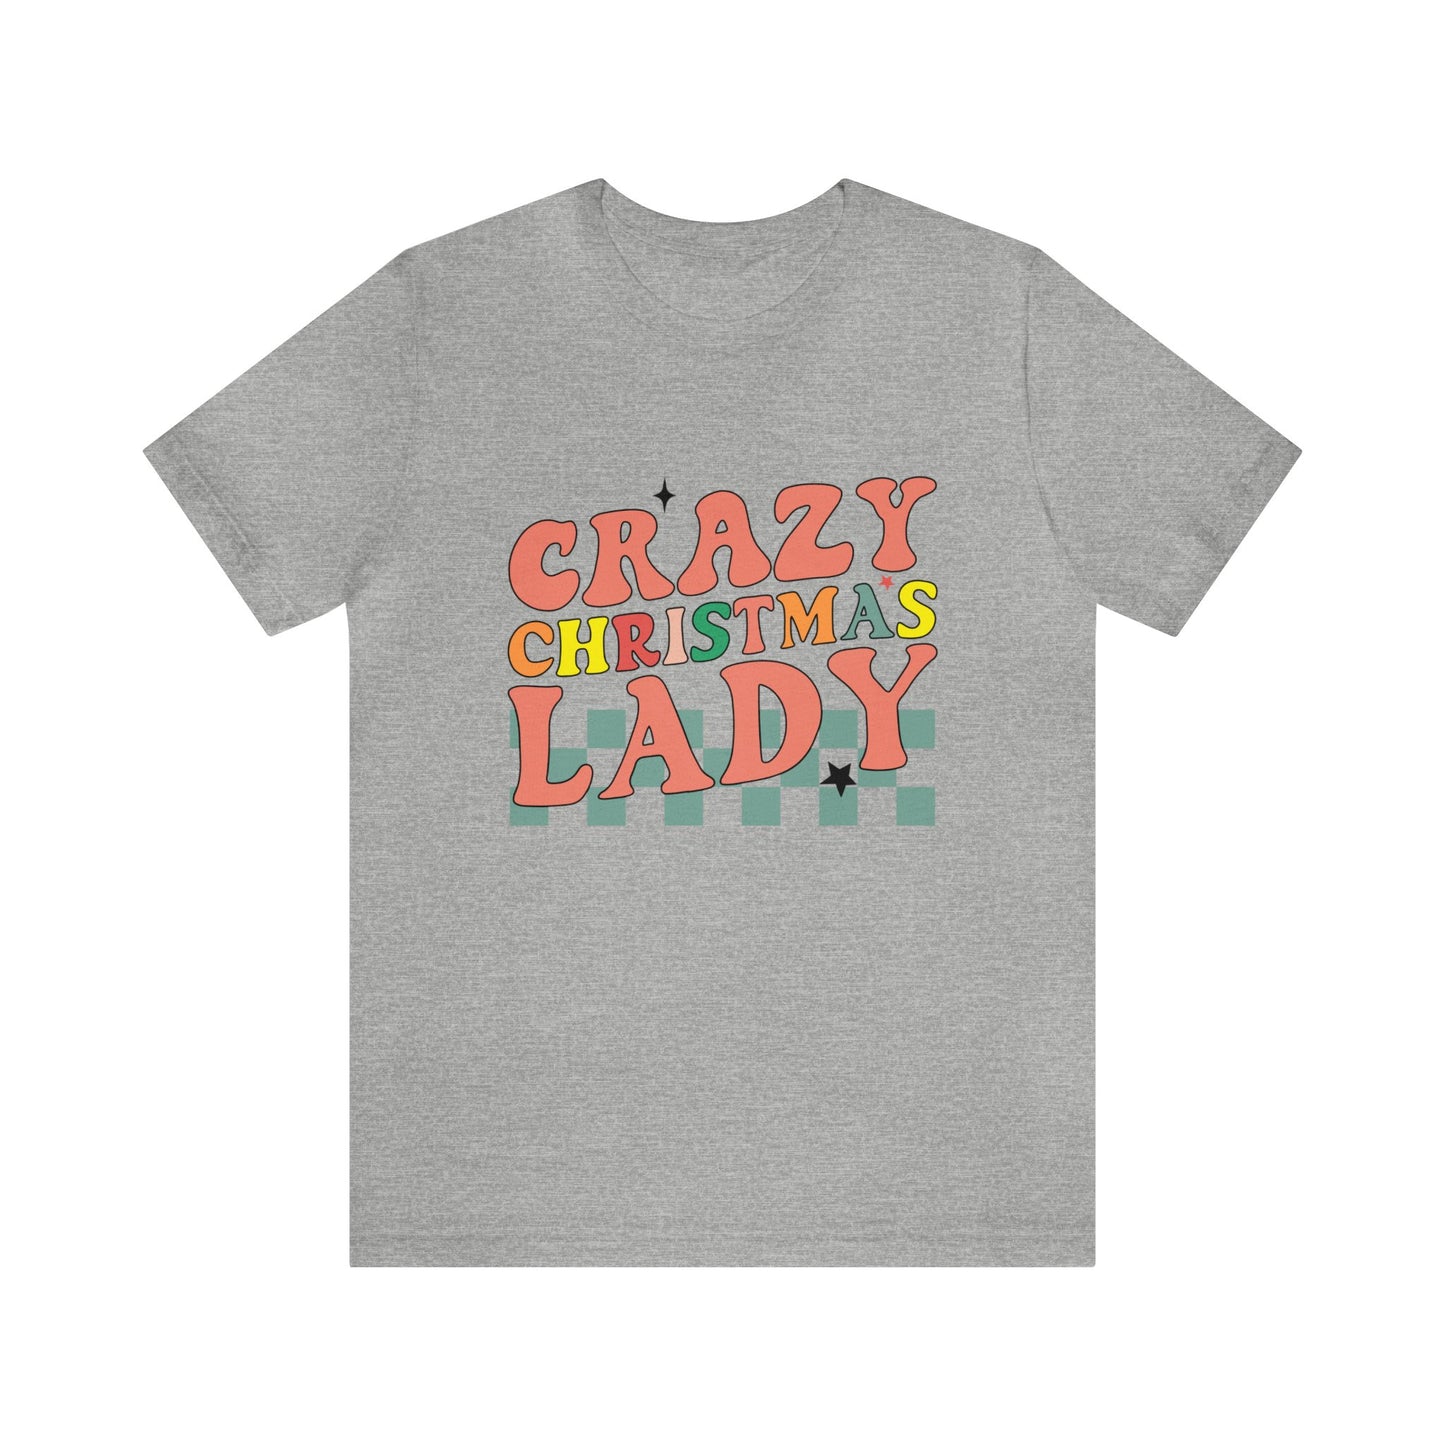 Crazy Christmas Lady Women's Funny Christmas Short Sleeve Shirt